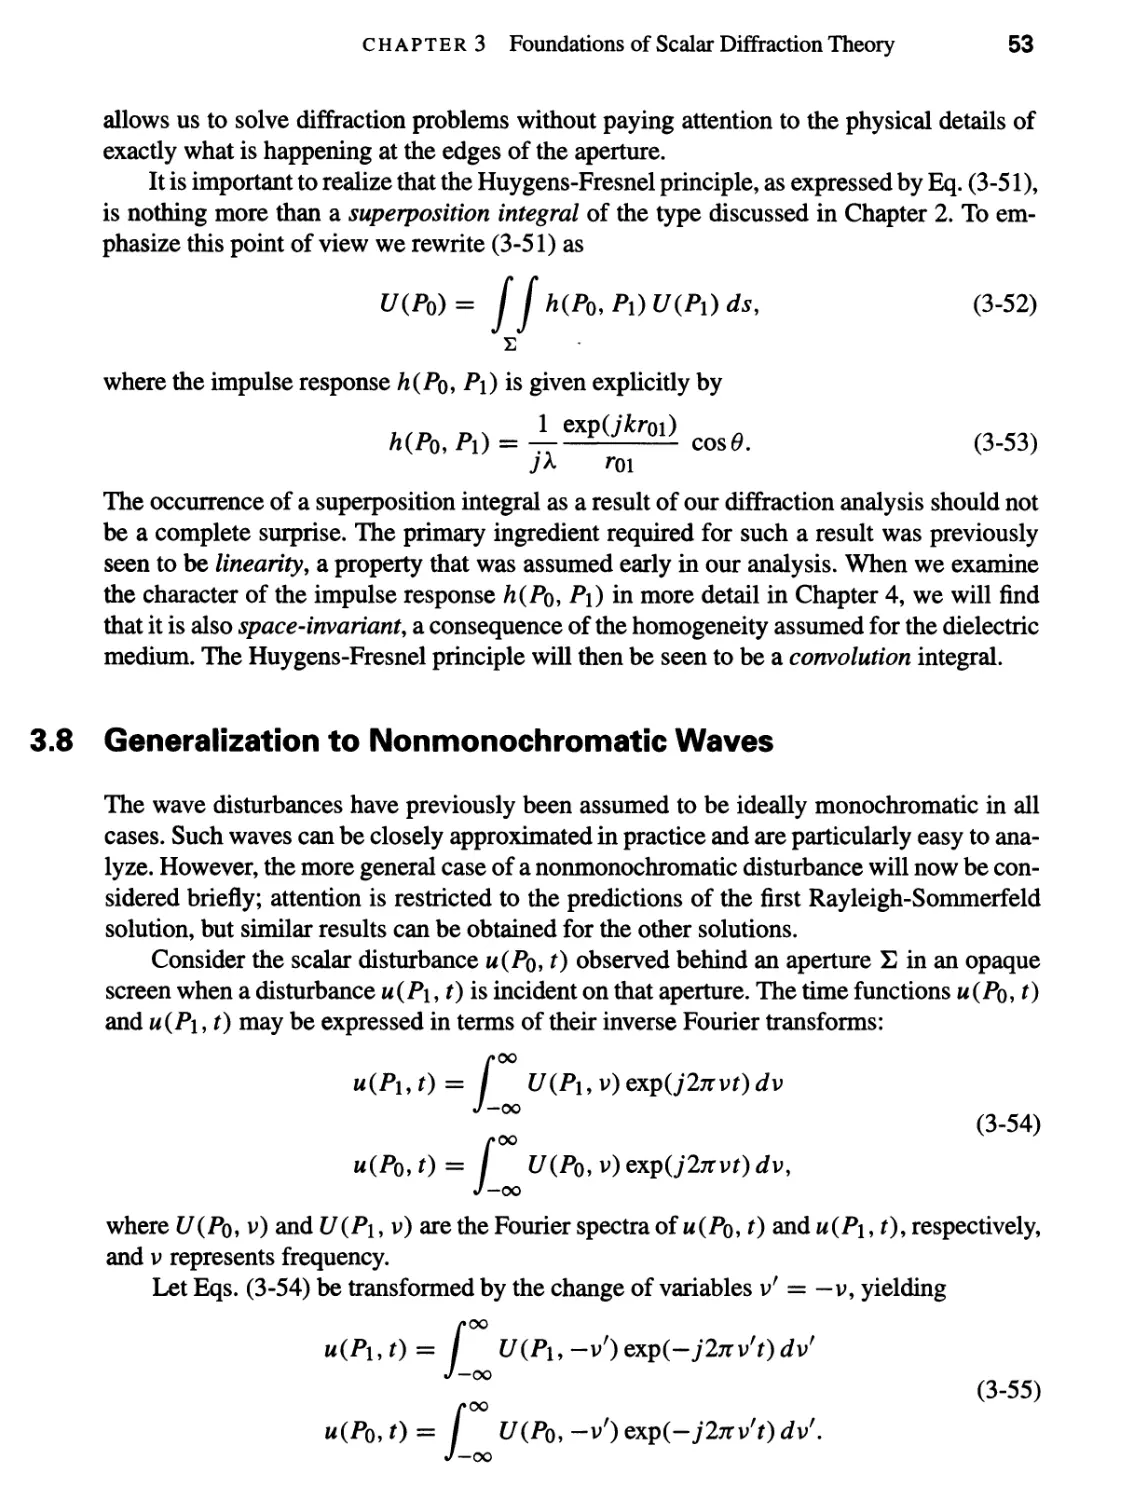 3.8 Generalization to Nonmonochromatic Waves 53